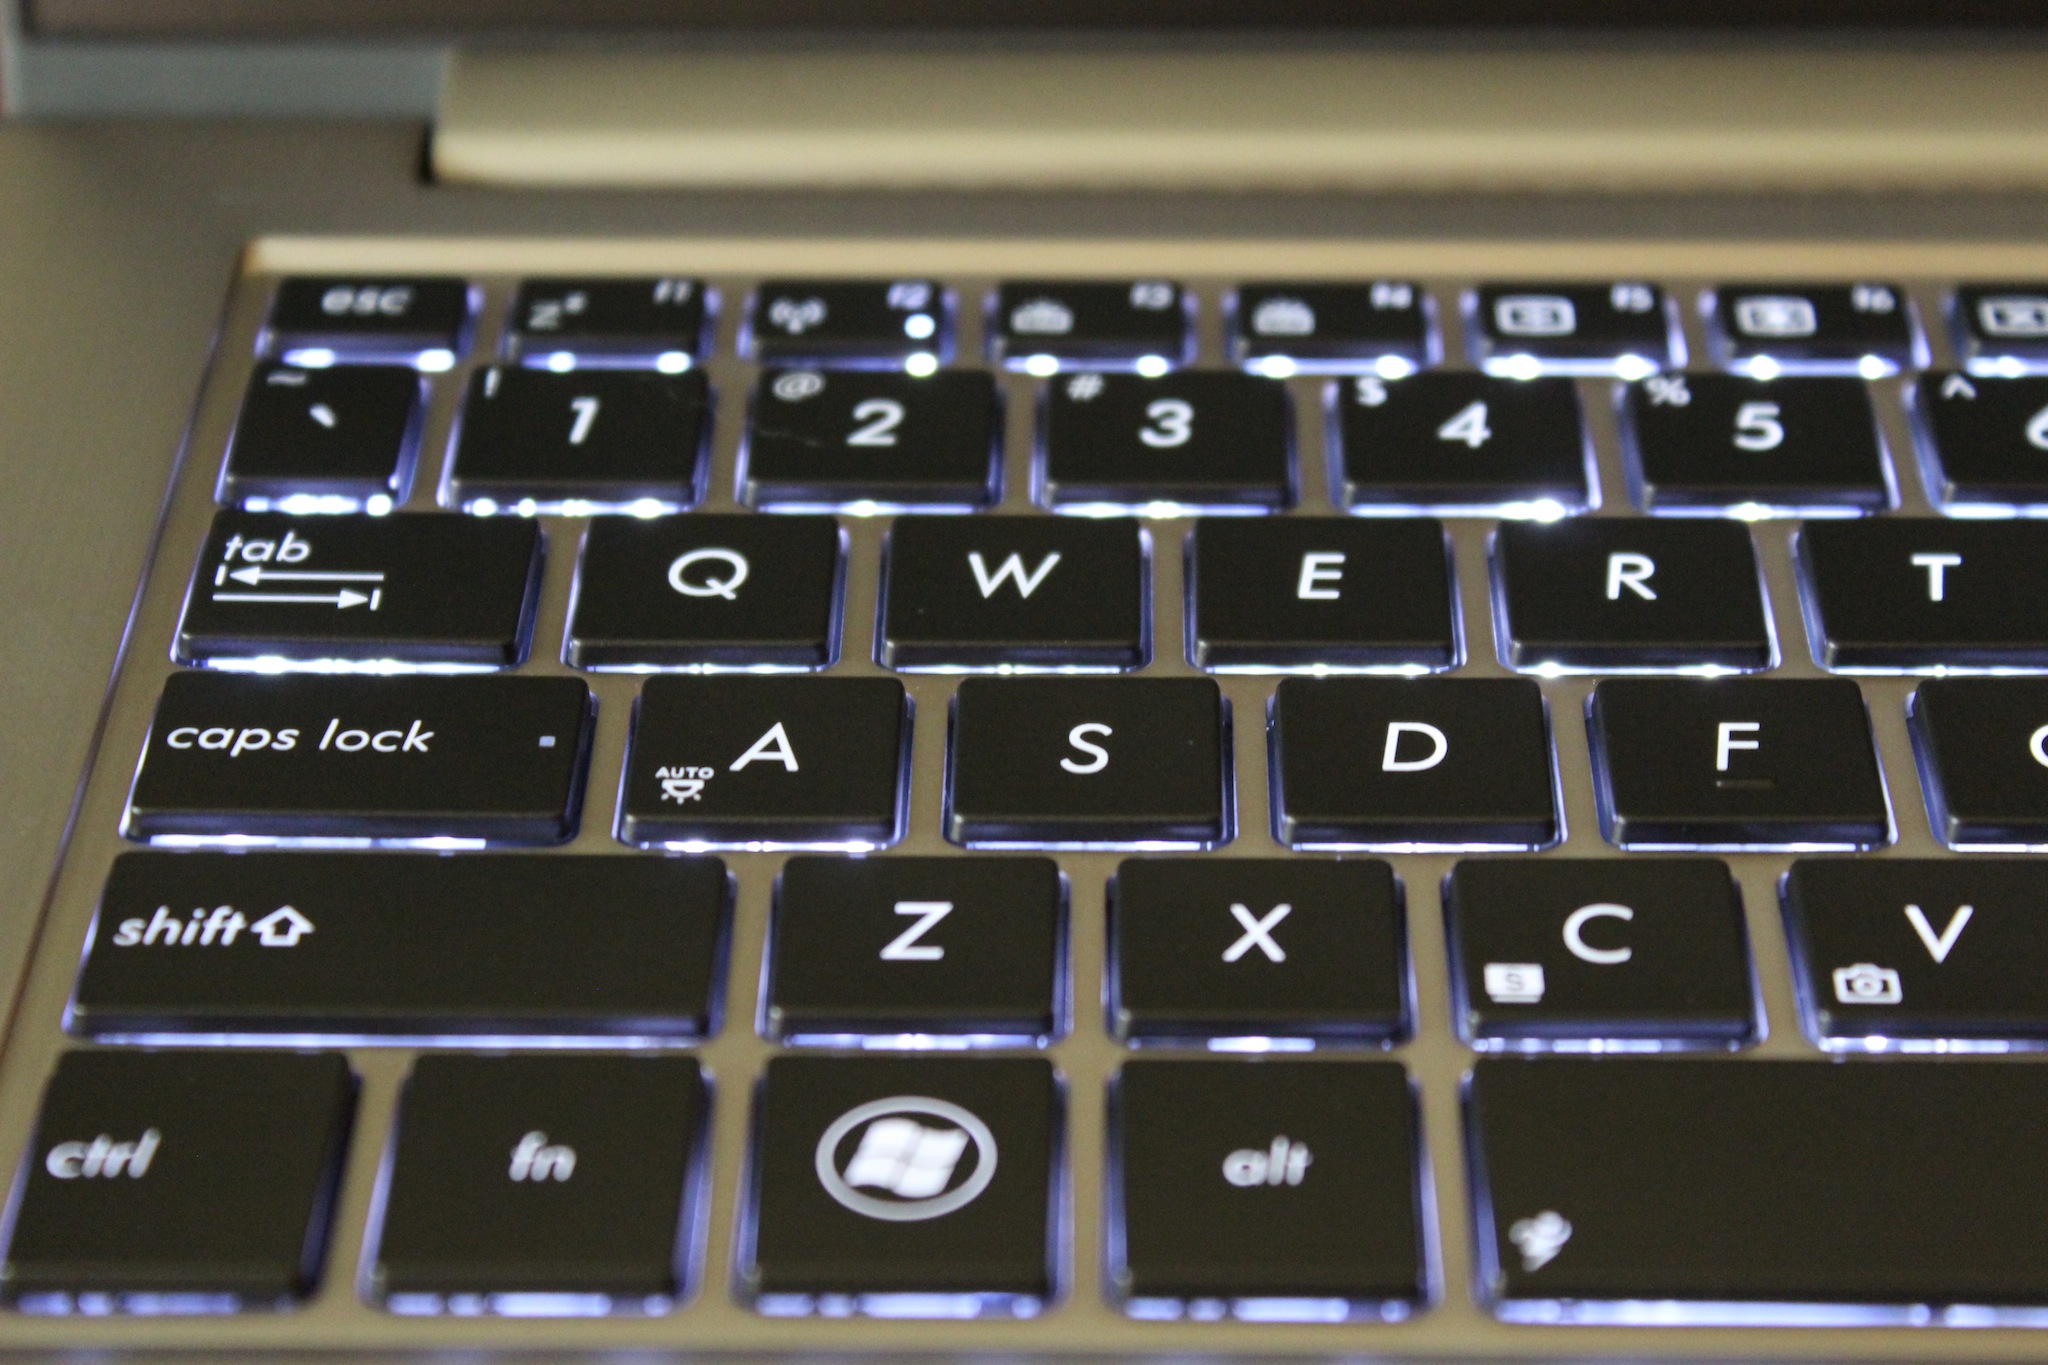 asus driver keyboard light | Decoratingspecial.com